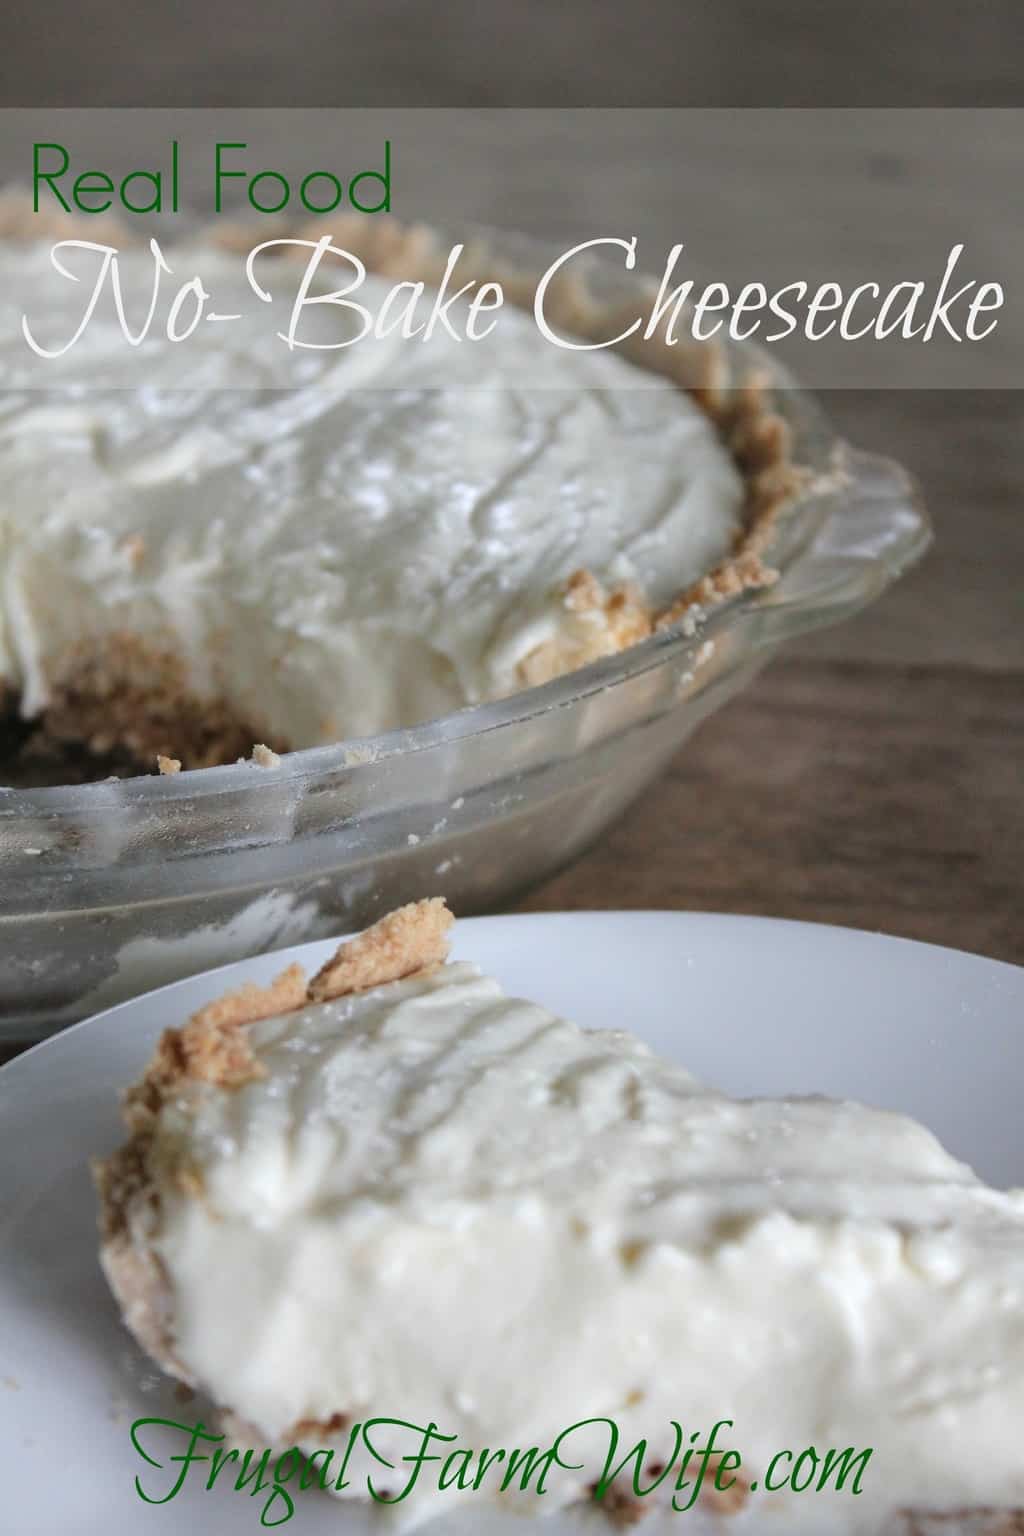 This no-bake cheesecake recipe is phenomenal! Easy to make - no Cool Whip. Yum!